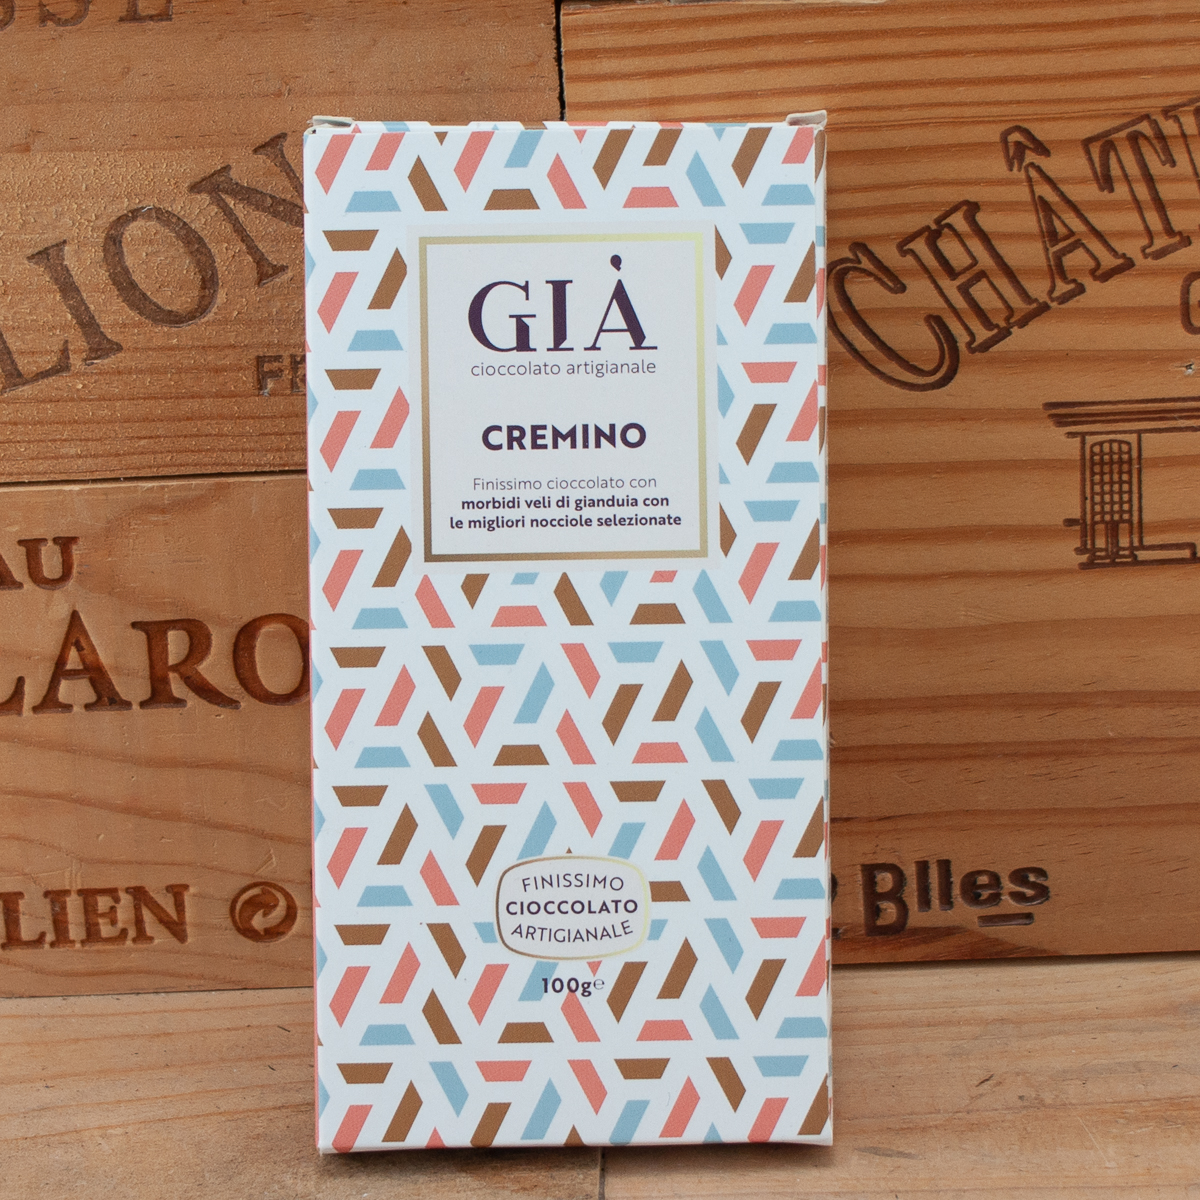 Die Schokoladentafel Cremino Giannattasio   